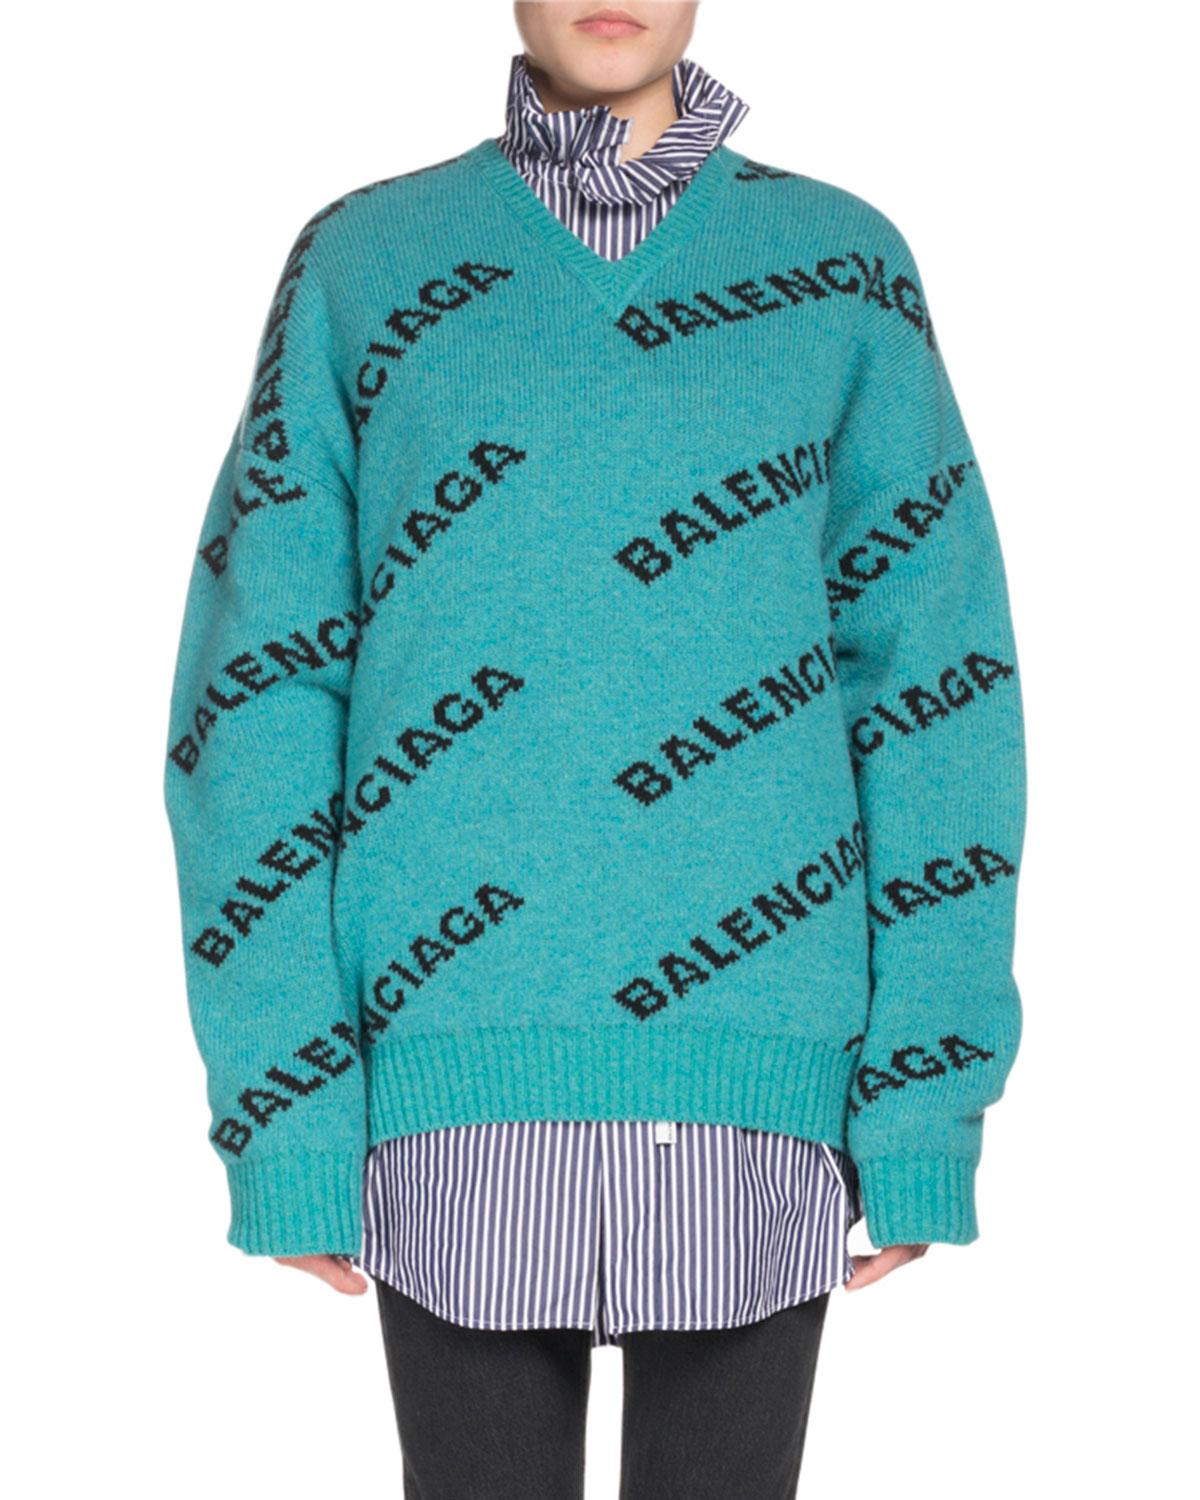 balenciaga turquoise sweater